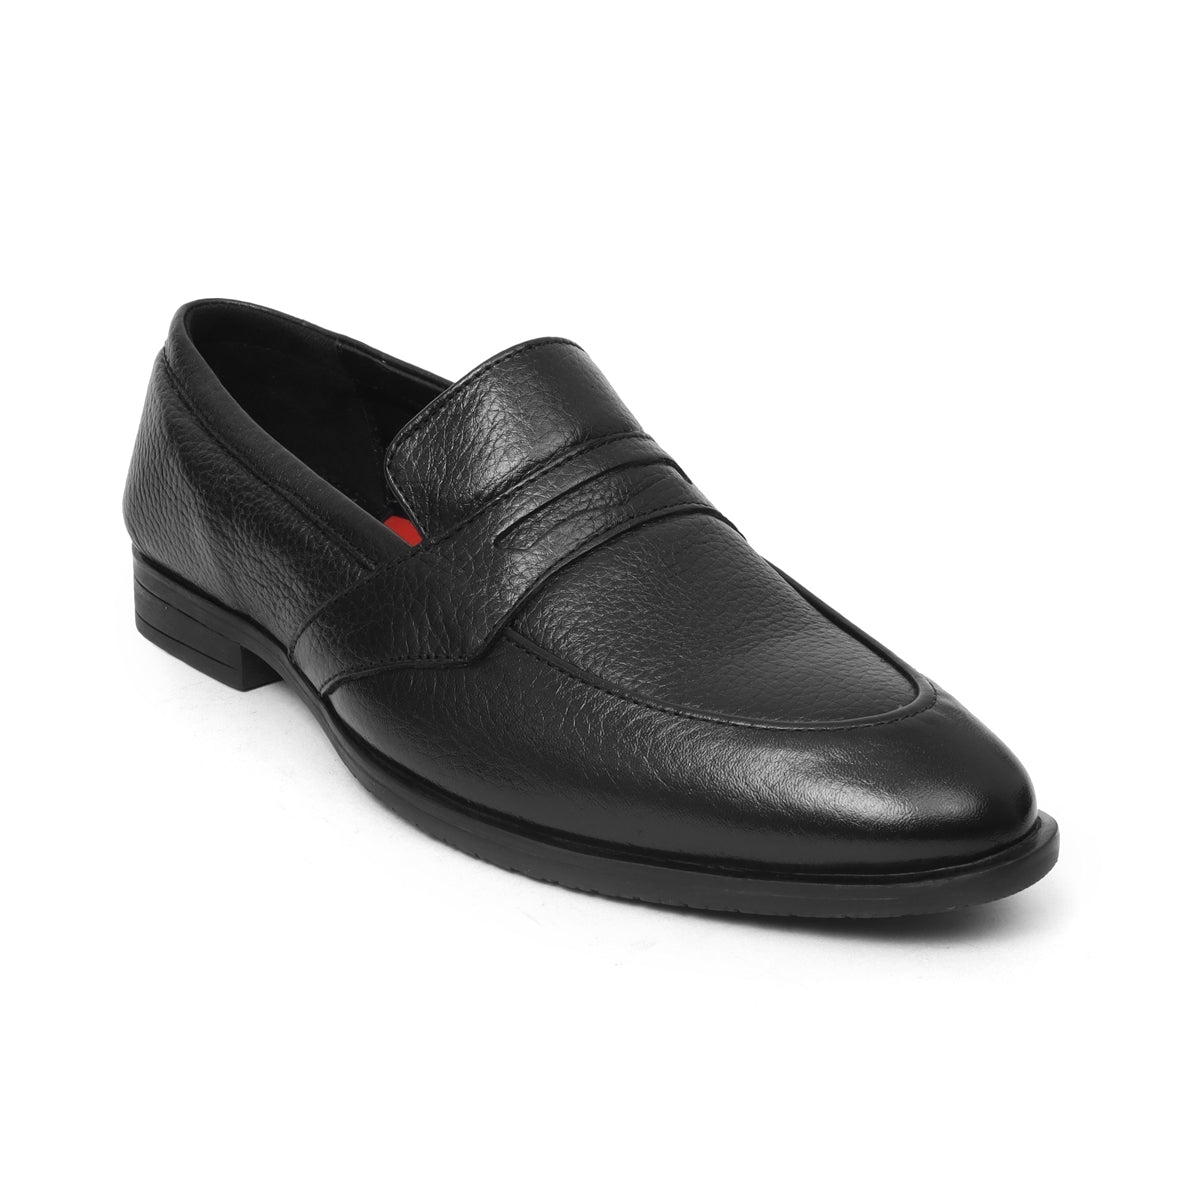 Formal Leather Shoes for Men BL-33